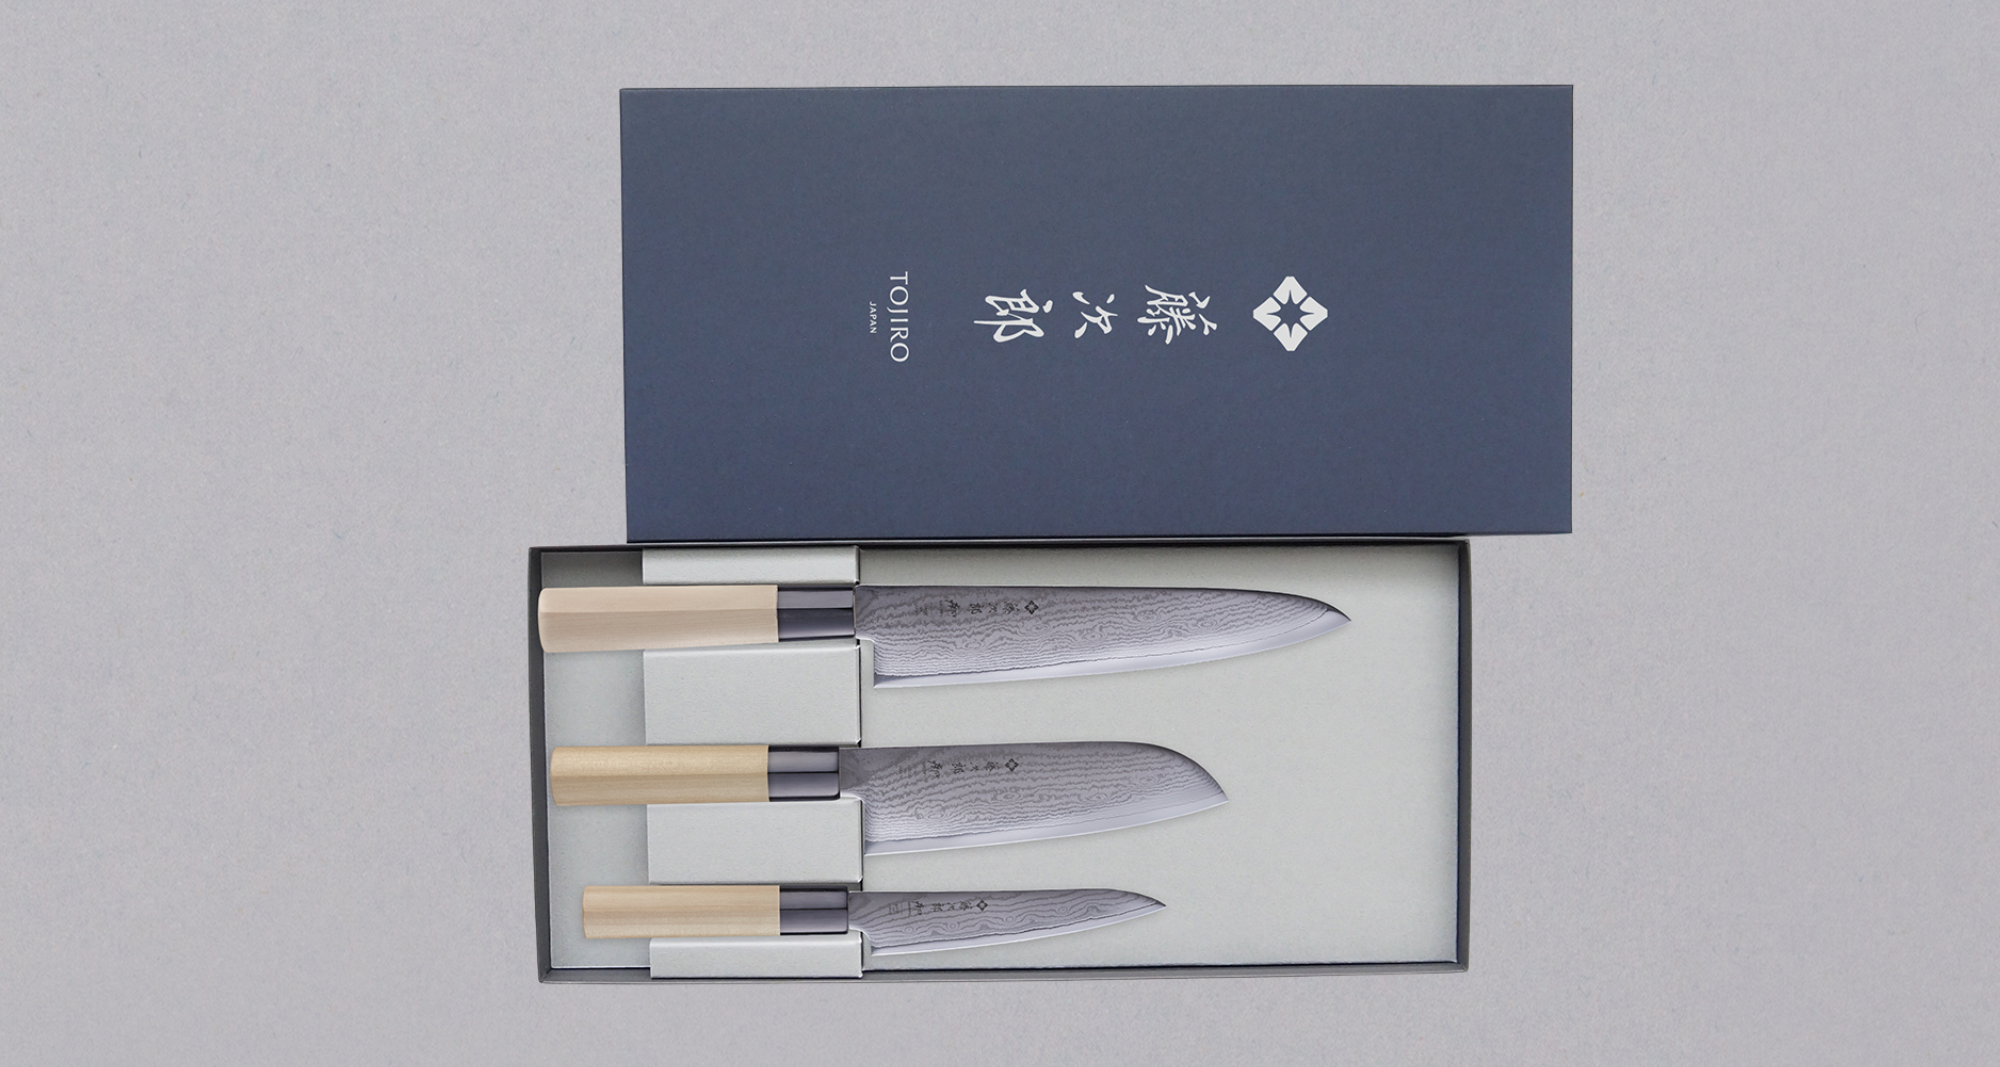 Tojiro Children's Santoku Knife Blue